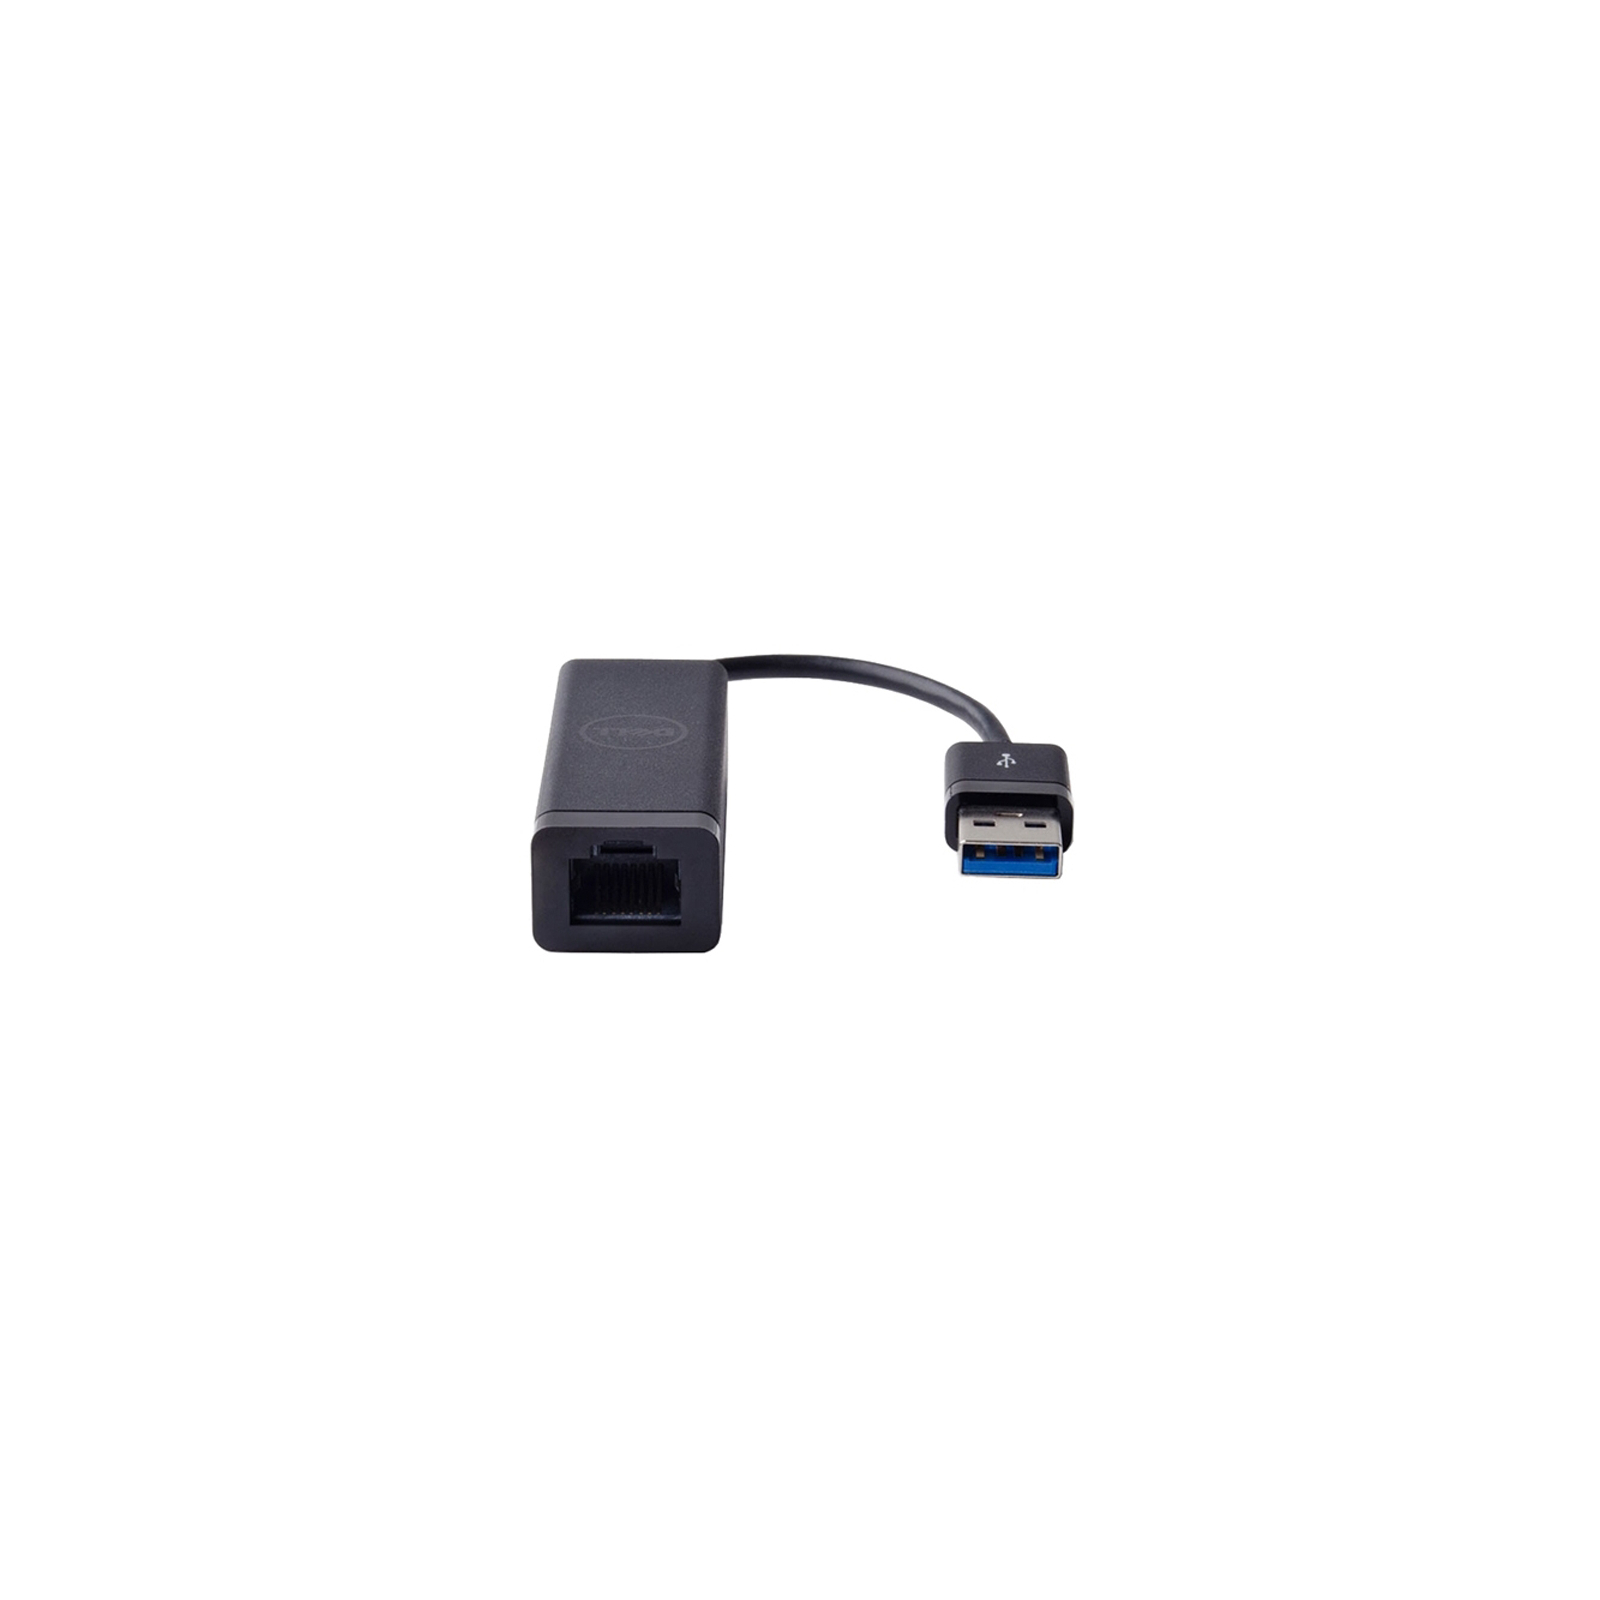 Переходник USB to Ethernet Dell (470-ABBT)